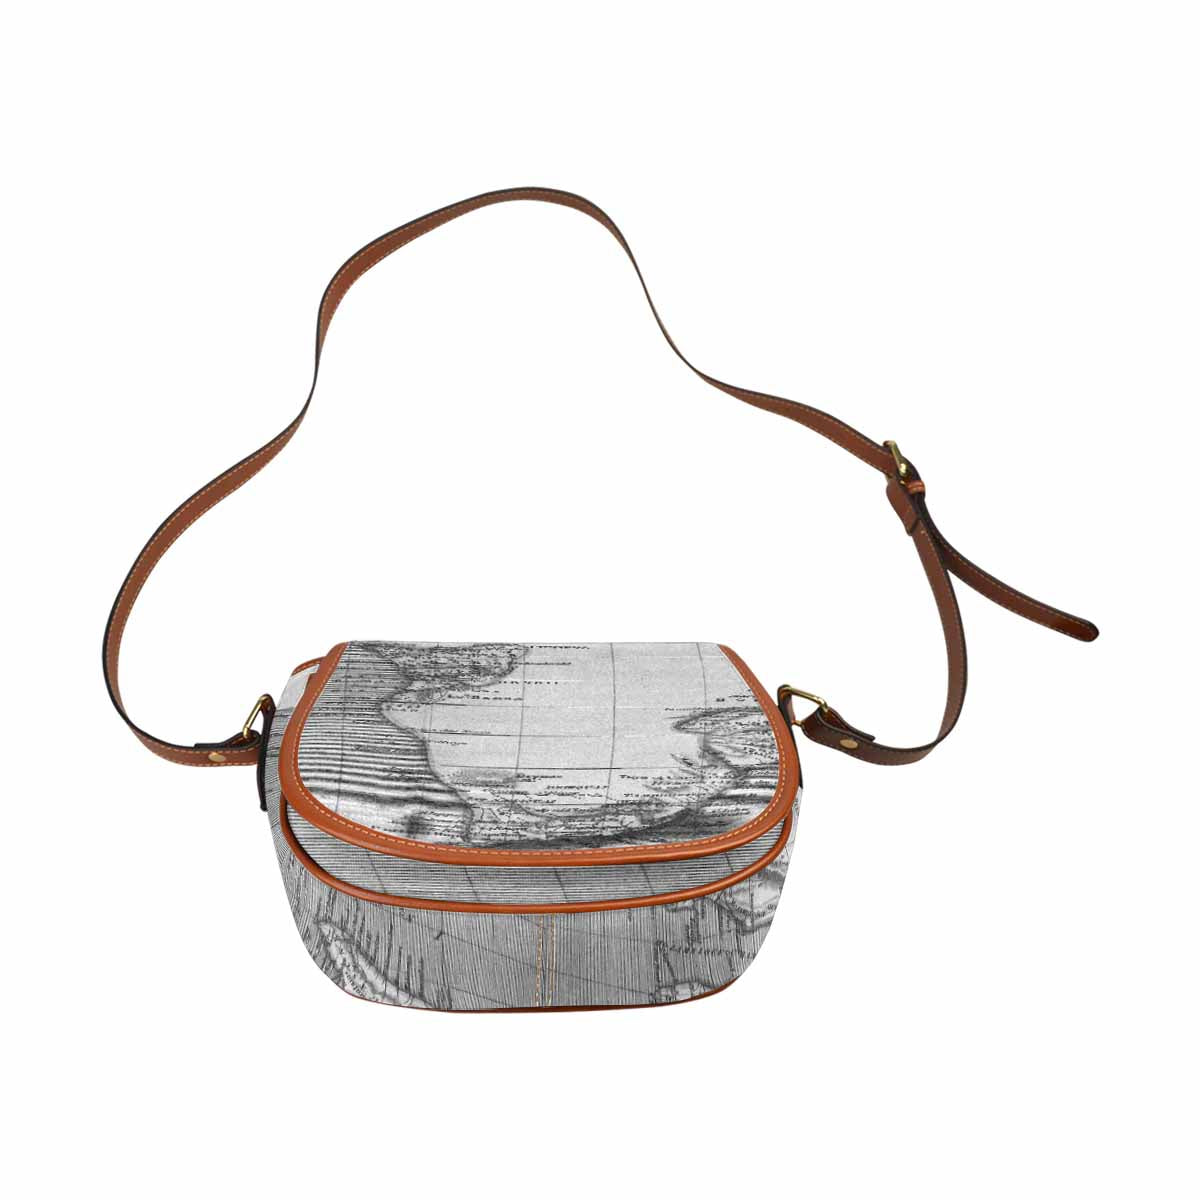 Antique Map design Handbag, saddle bag, Design 2